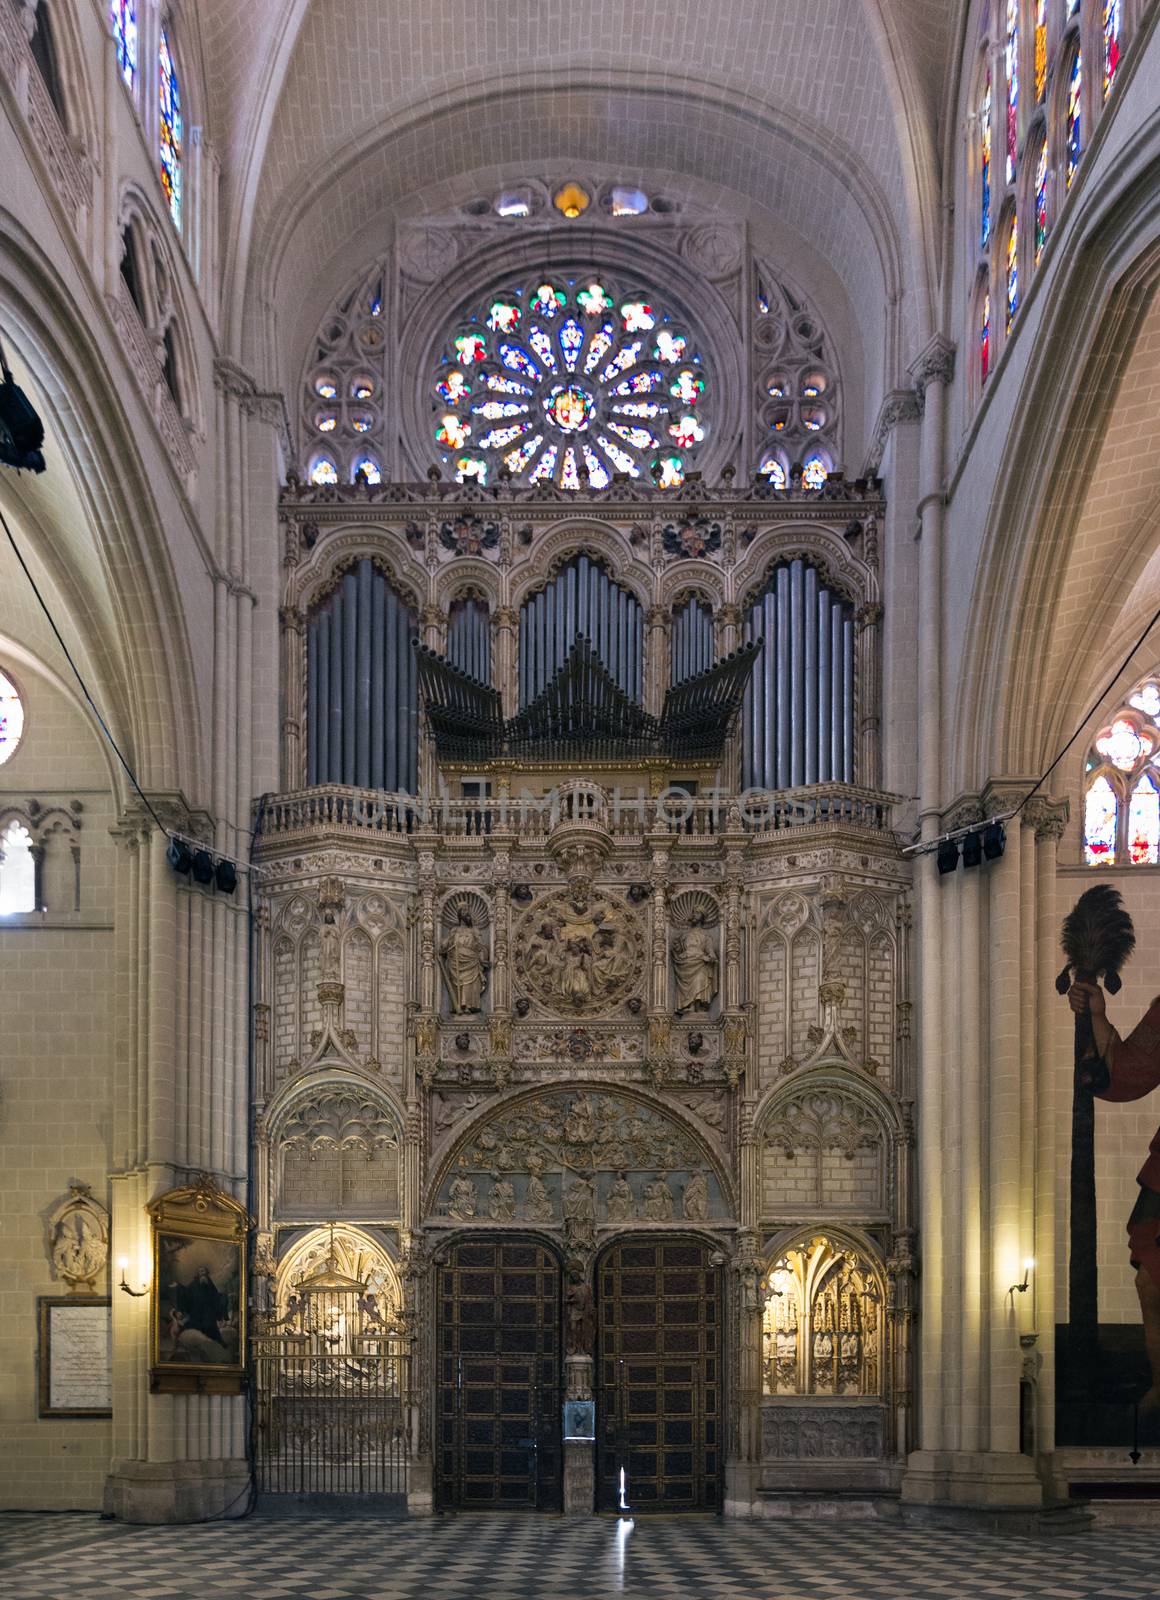 TOLEDO, SPAIN - MAY 19, 2014: Doorway and church organ of Toledo by fisfra